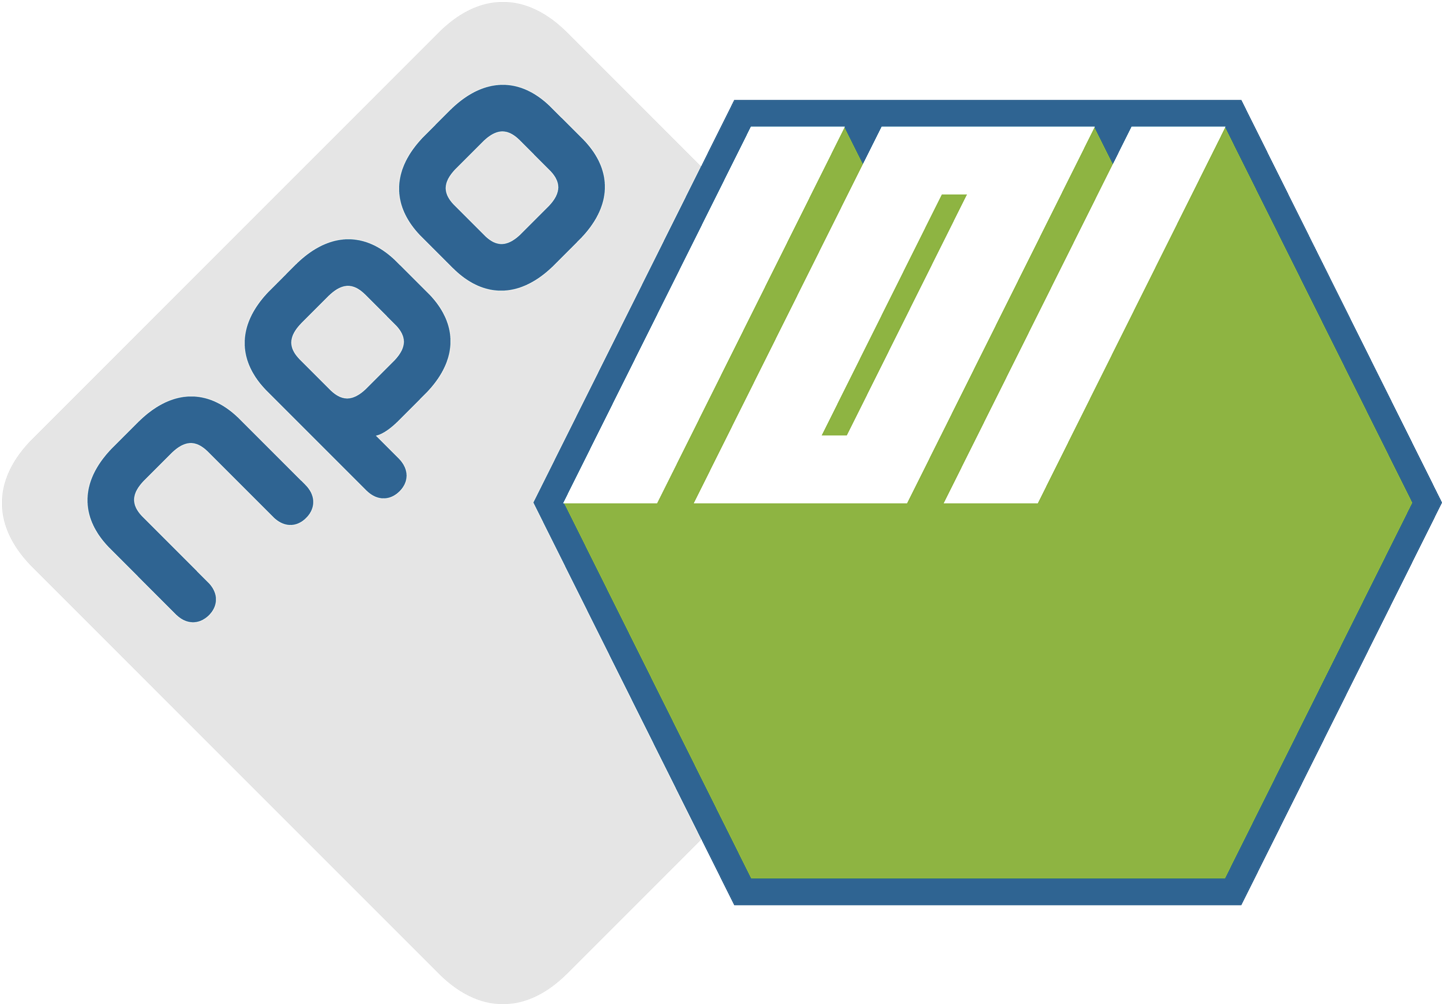 NPO Logo - Image - NPO 101.png | Logopedia | FANDOM powered by Wikia